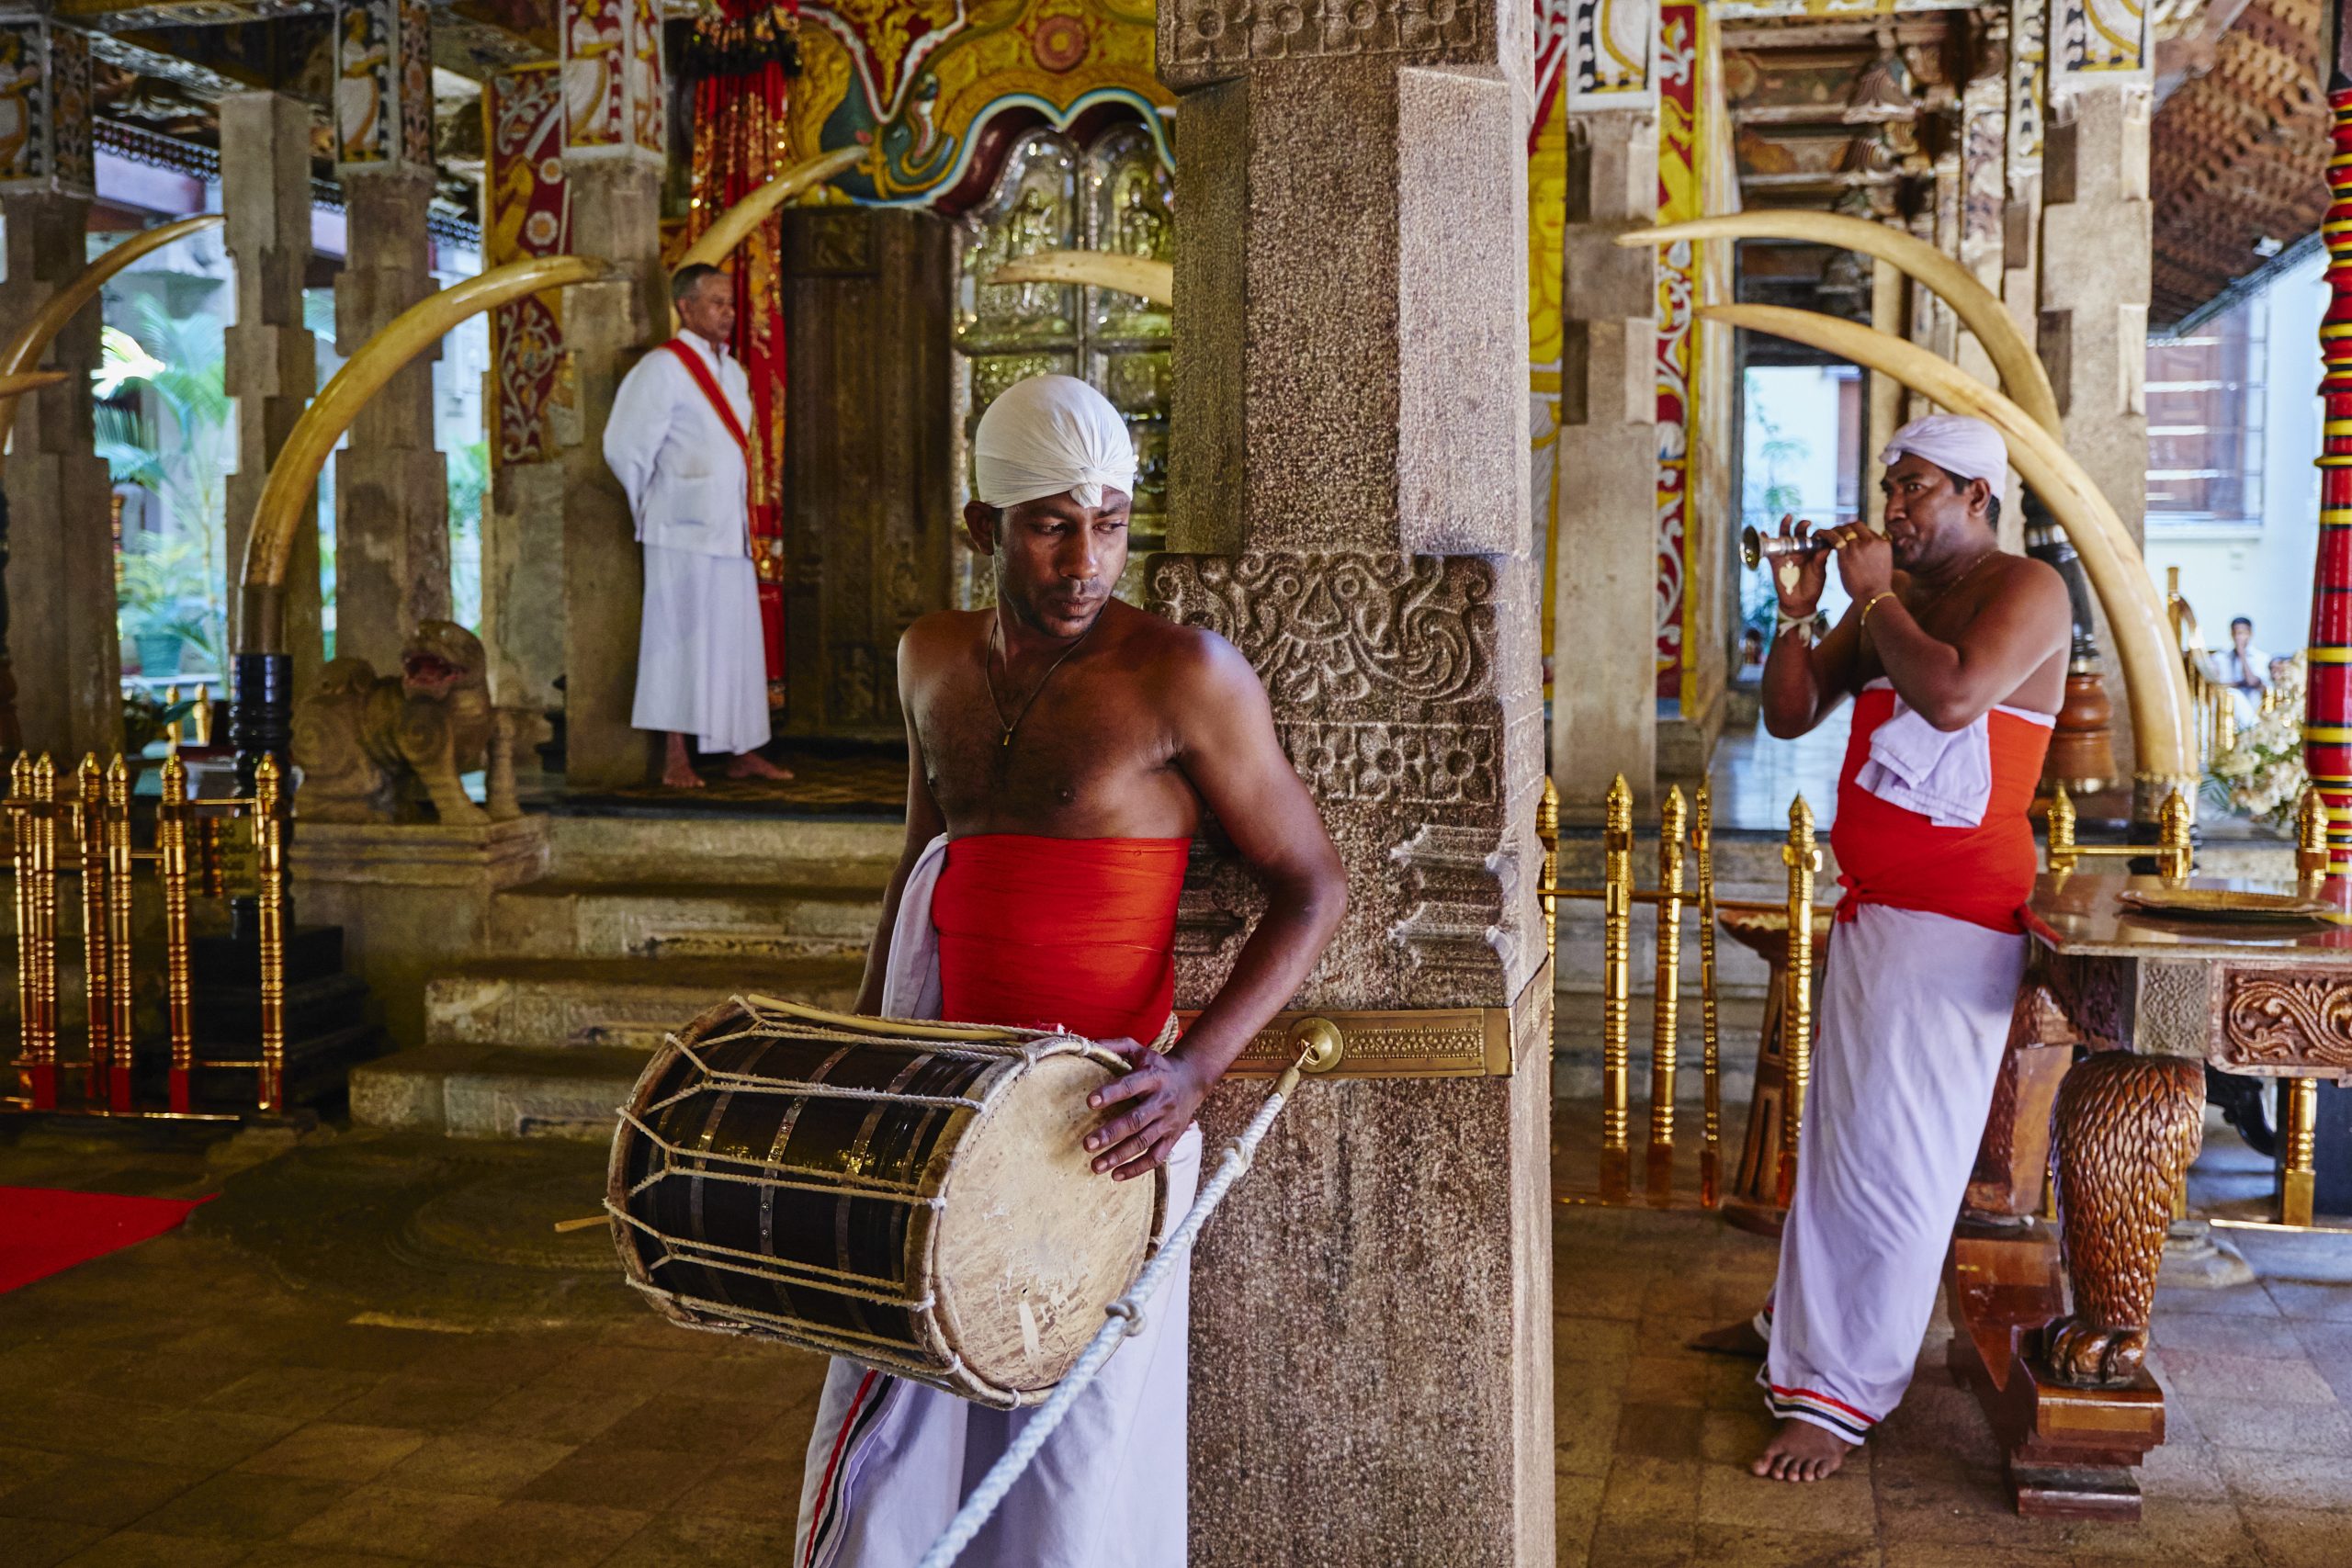 Sri Lanka, Kandy, Tooth's temple